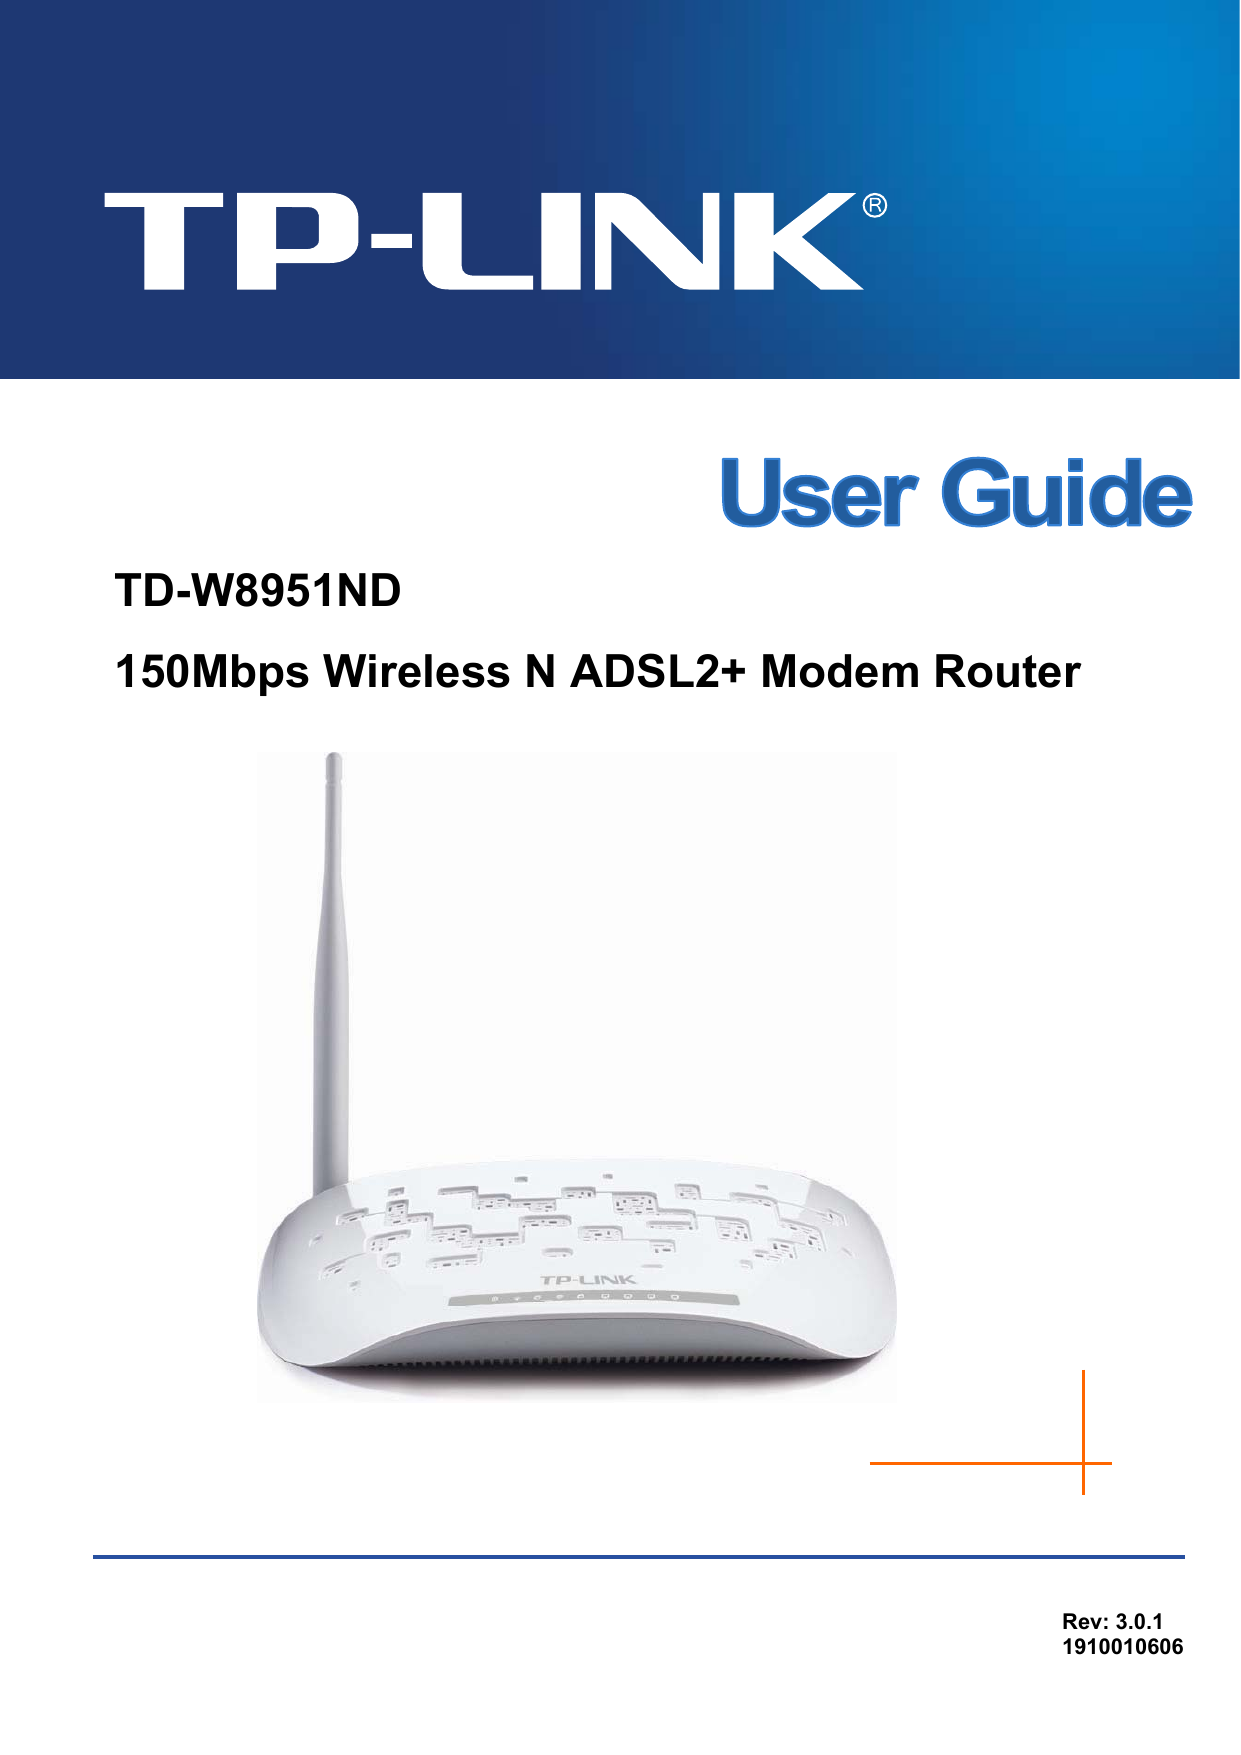   TD-W8951ND 150Mbps Wireless N ADSL2+ Modem Router   Rev: 3.0.1 1910010606 